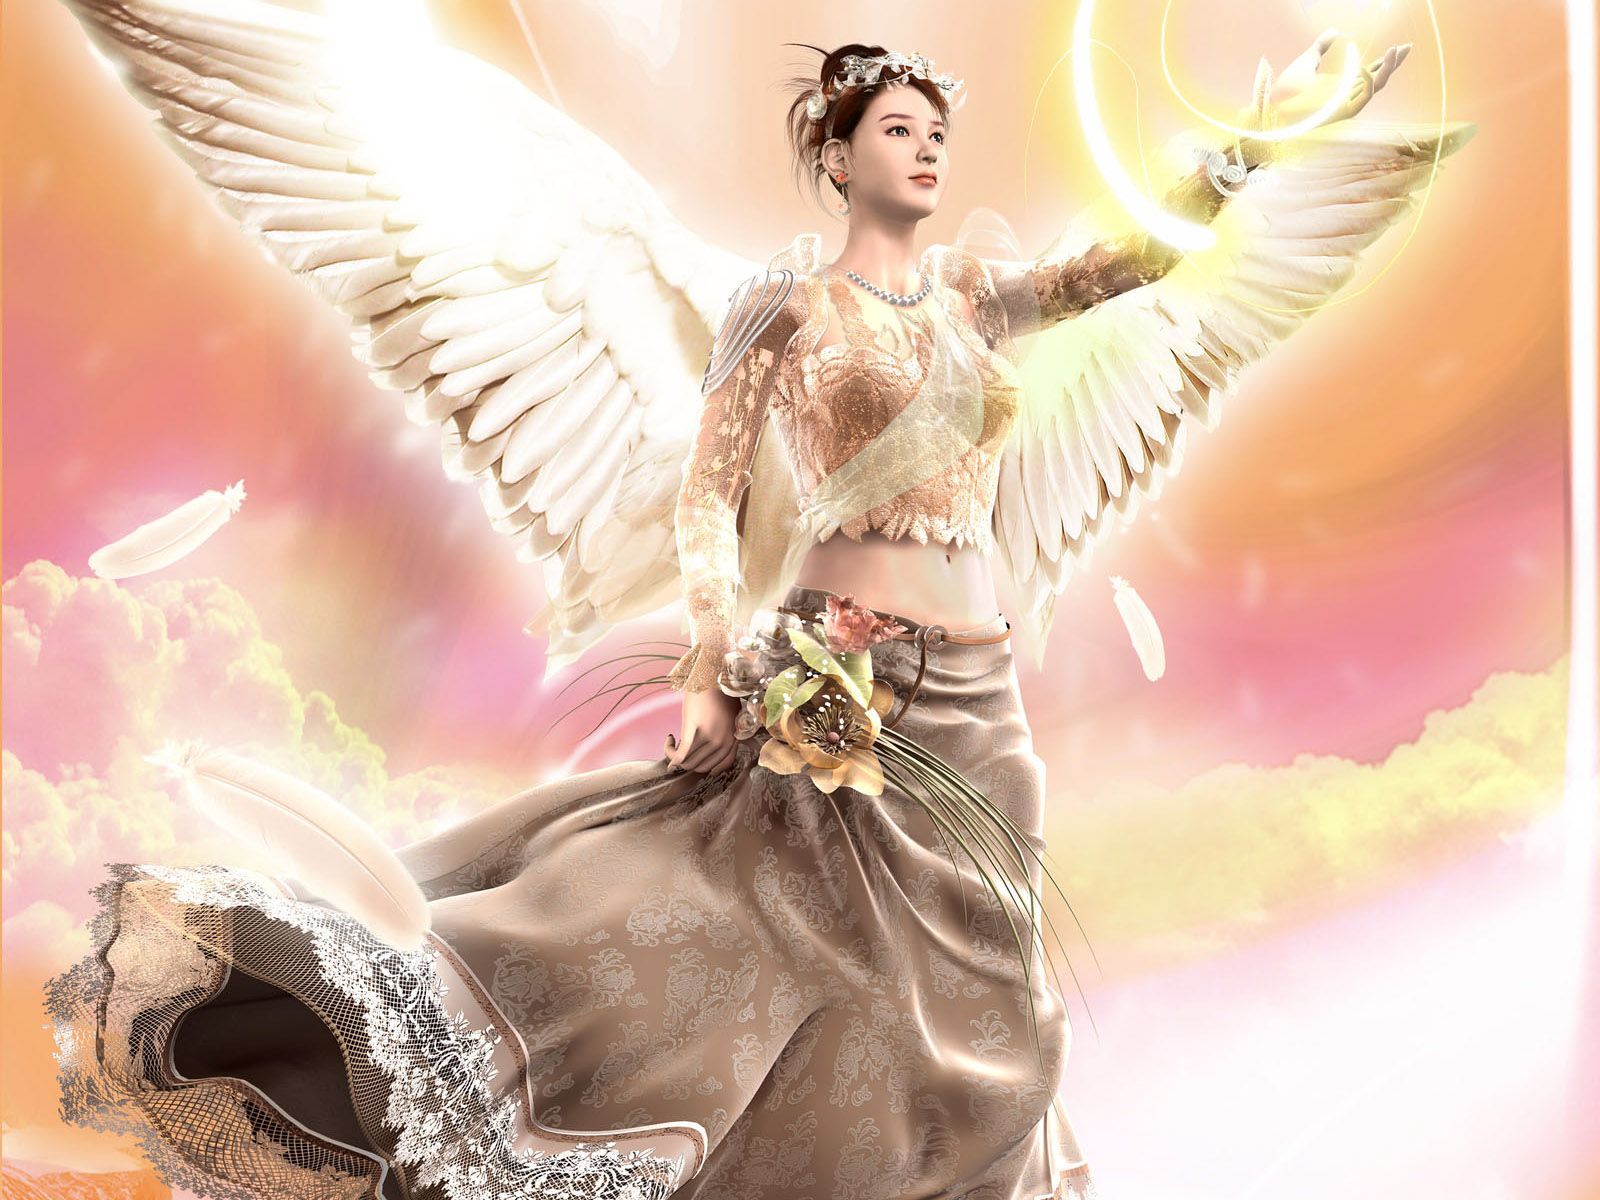 Beautiful Angels wallpaper. Fantasy girl, Angel wallpaper, Fantasy women